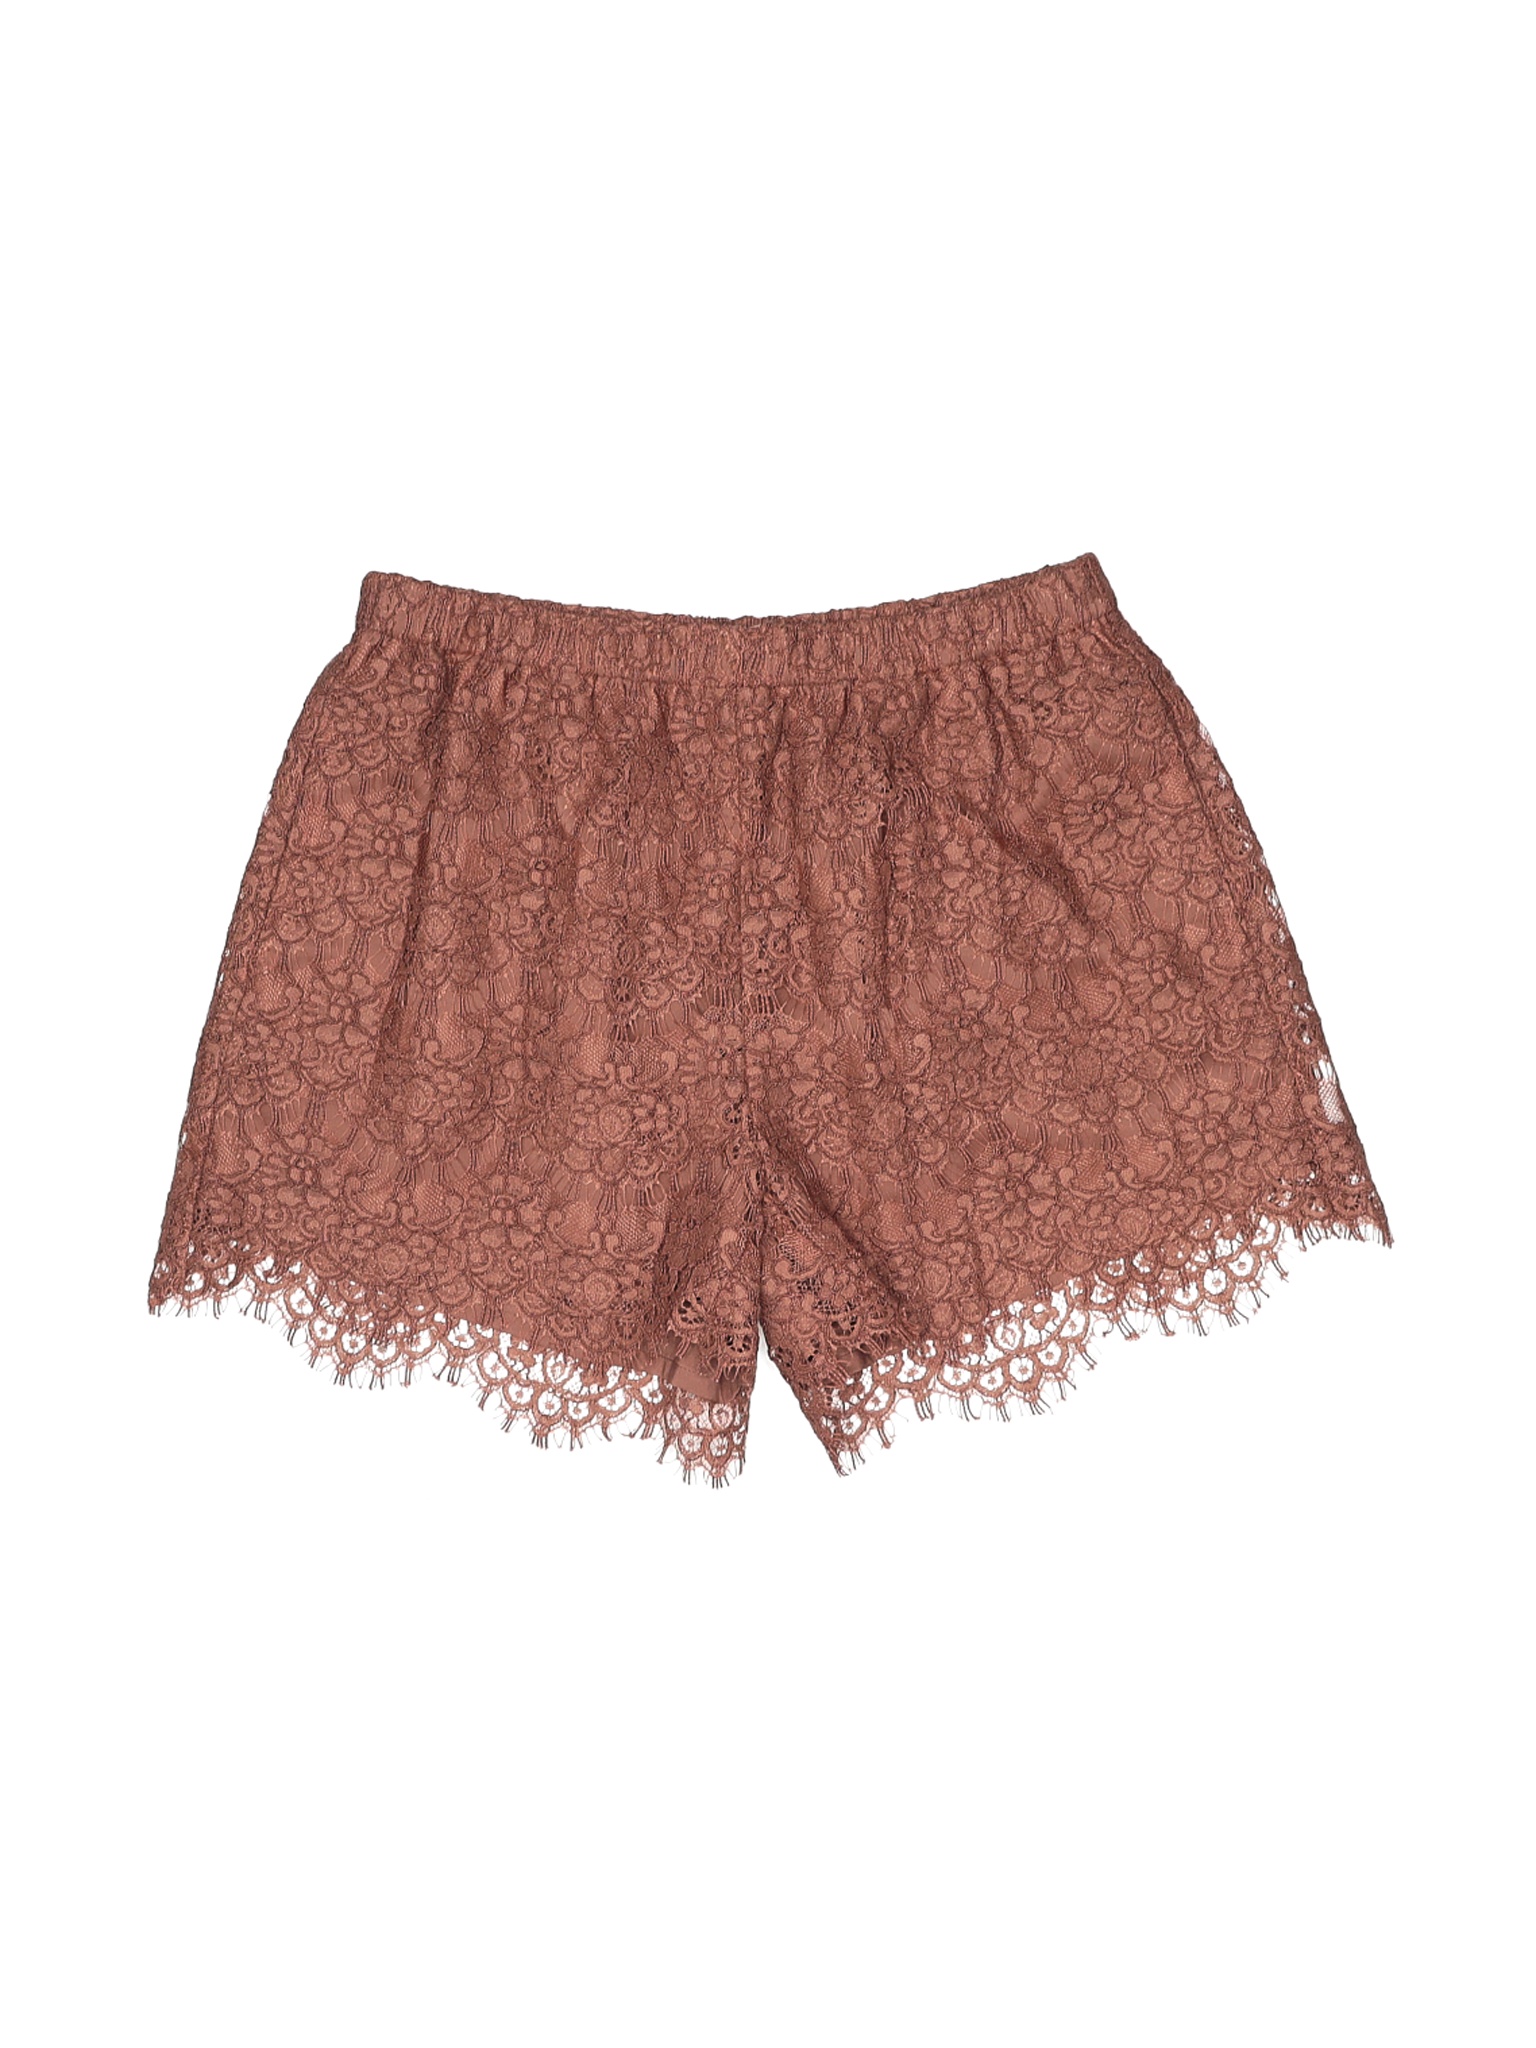 Broadway & Broome Women Brown Shorts S | eBay